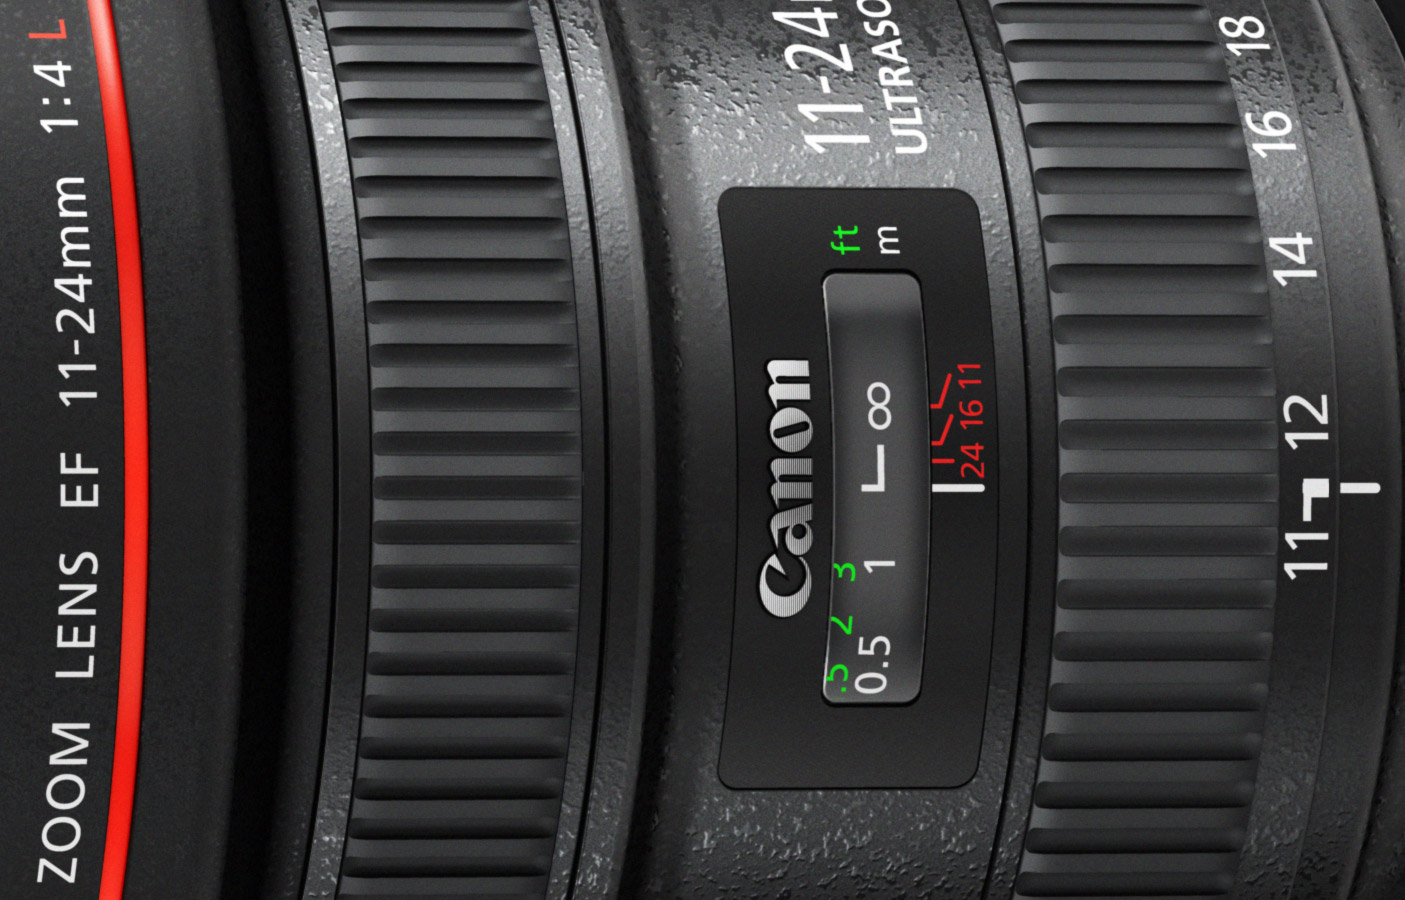 Canon EF 11-24mm f/4 L USM